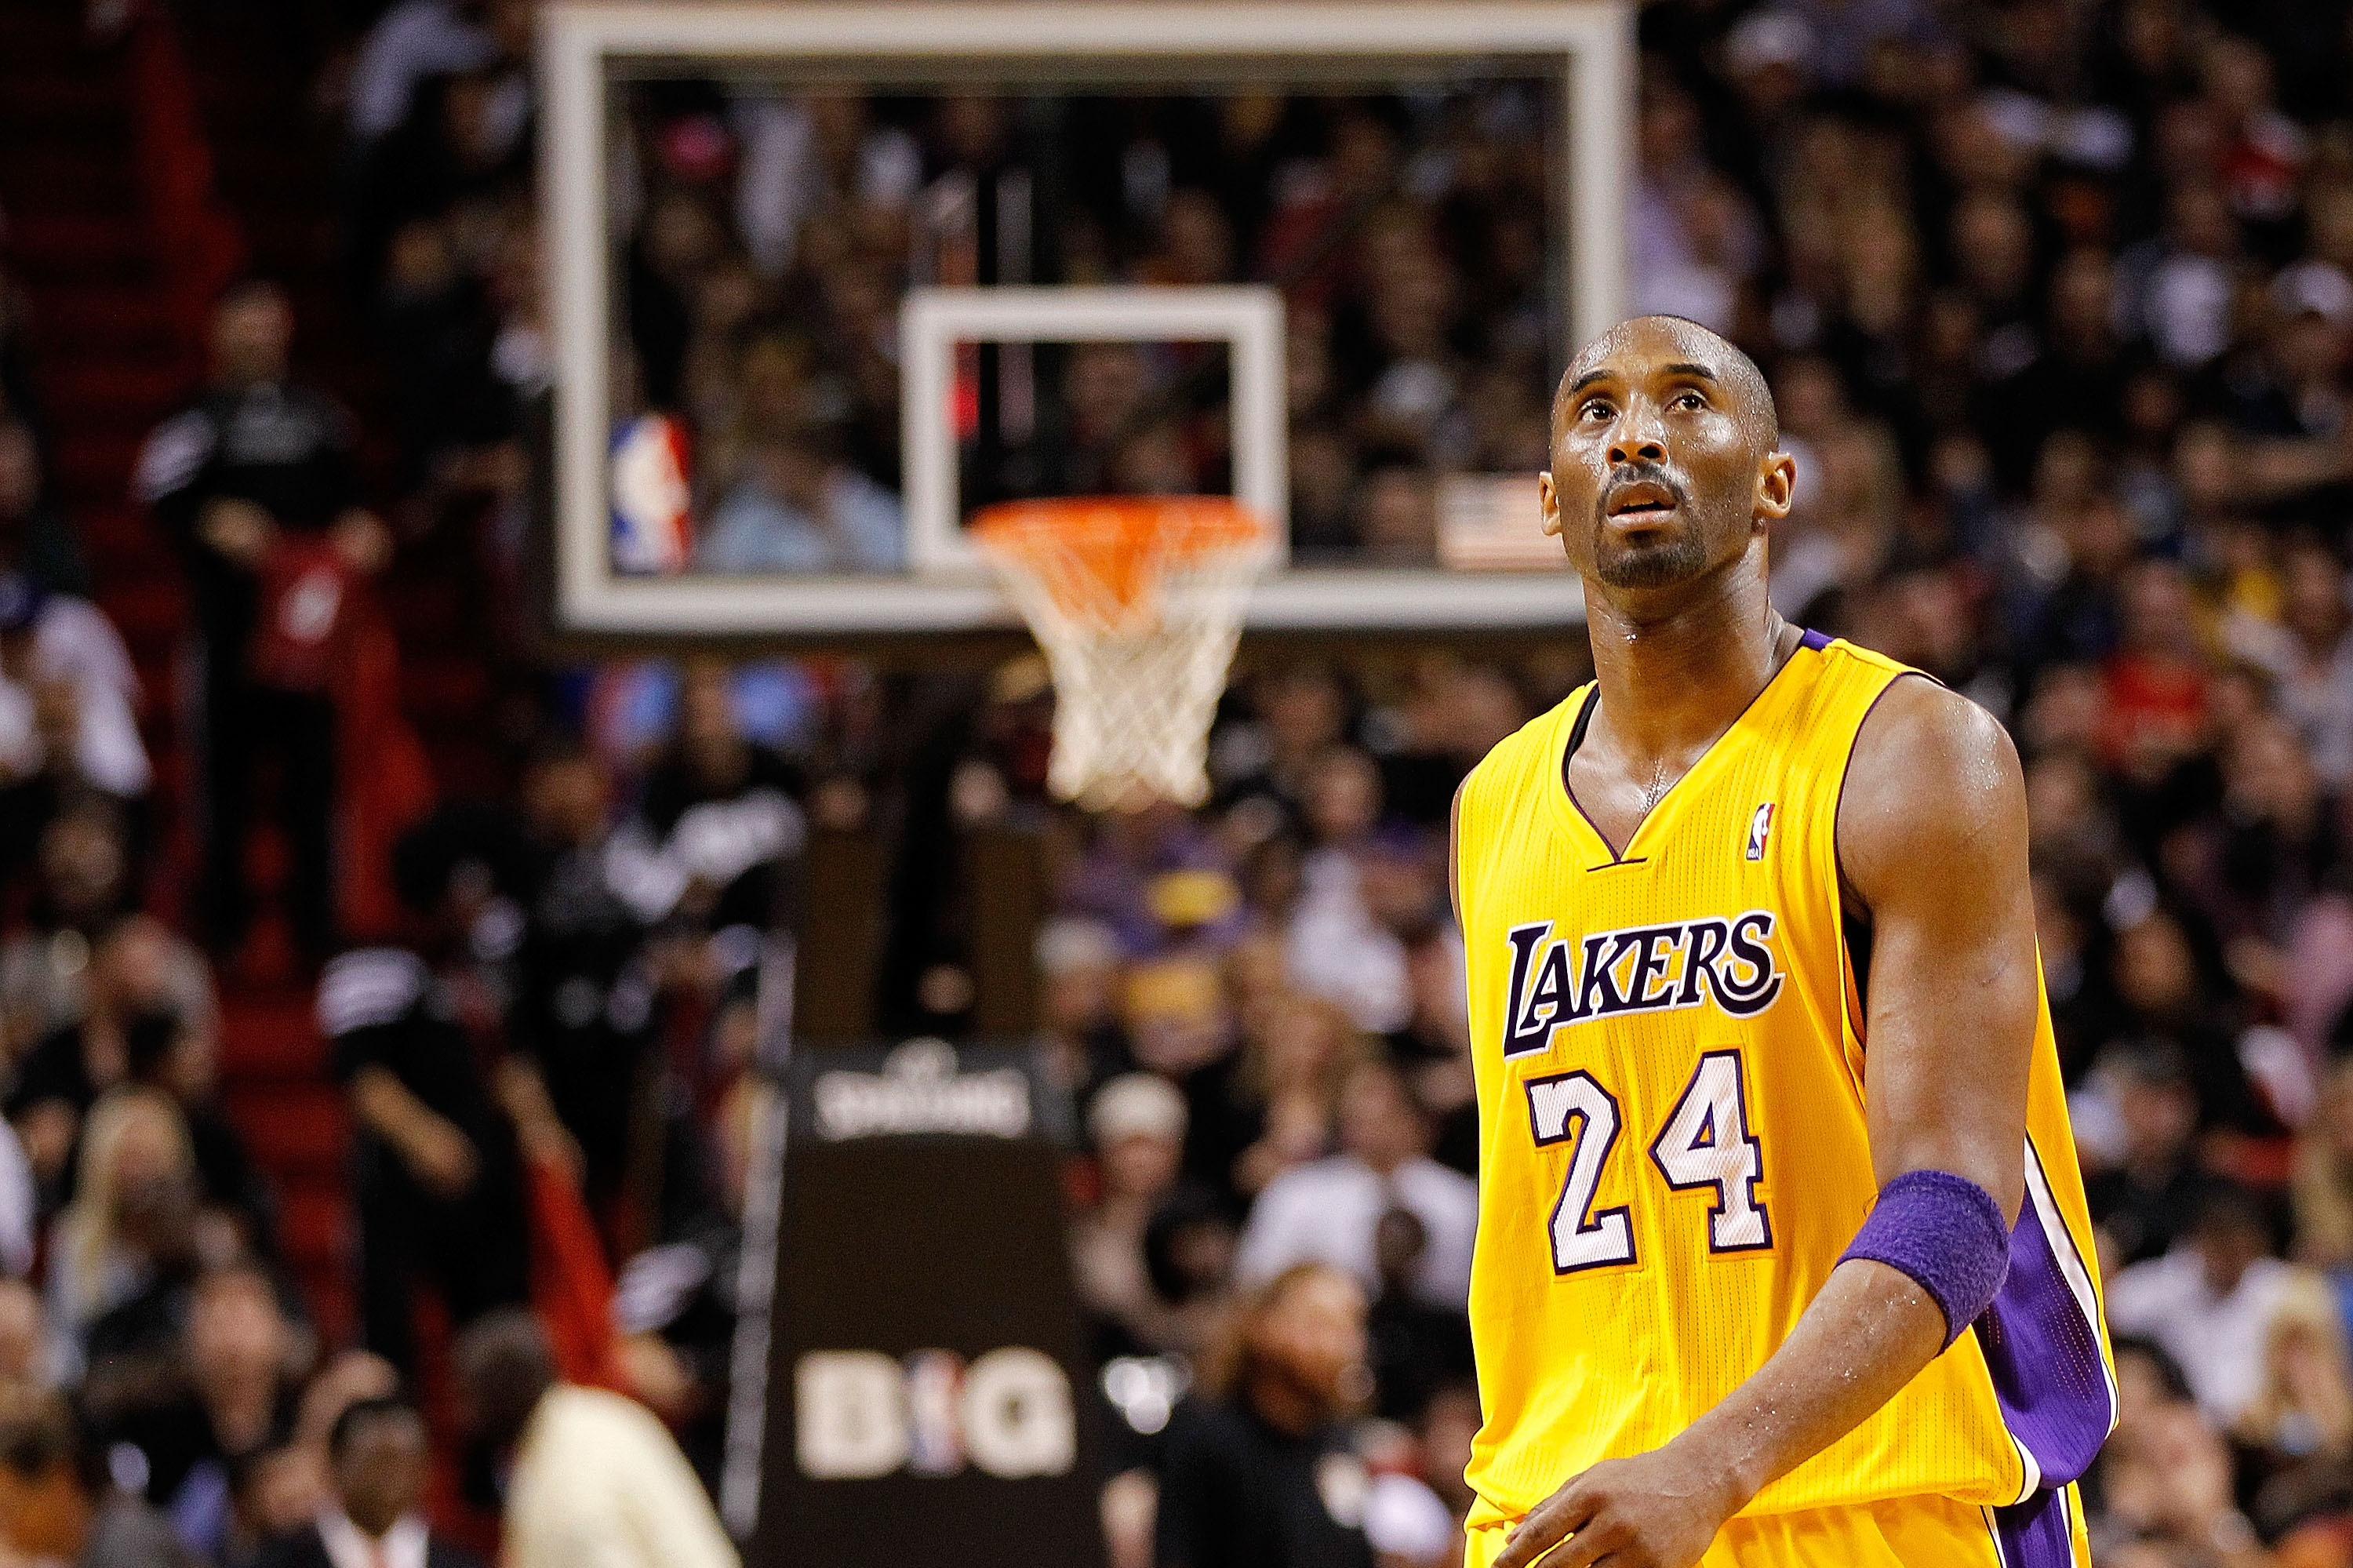 Lakers legend Jerry West drops eye-opening Kobe Bryant-Grizzlies